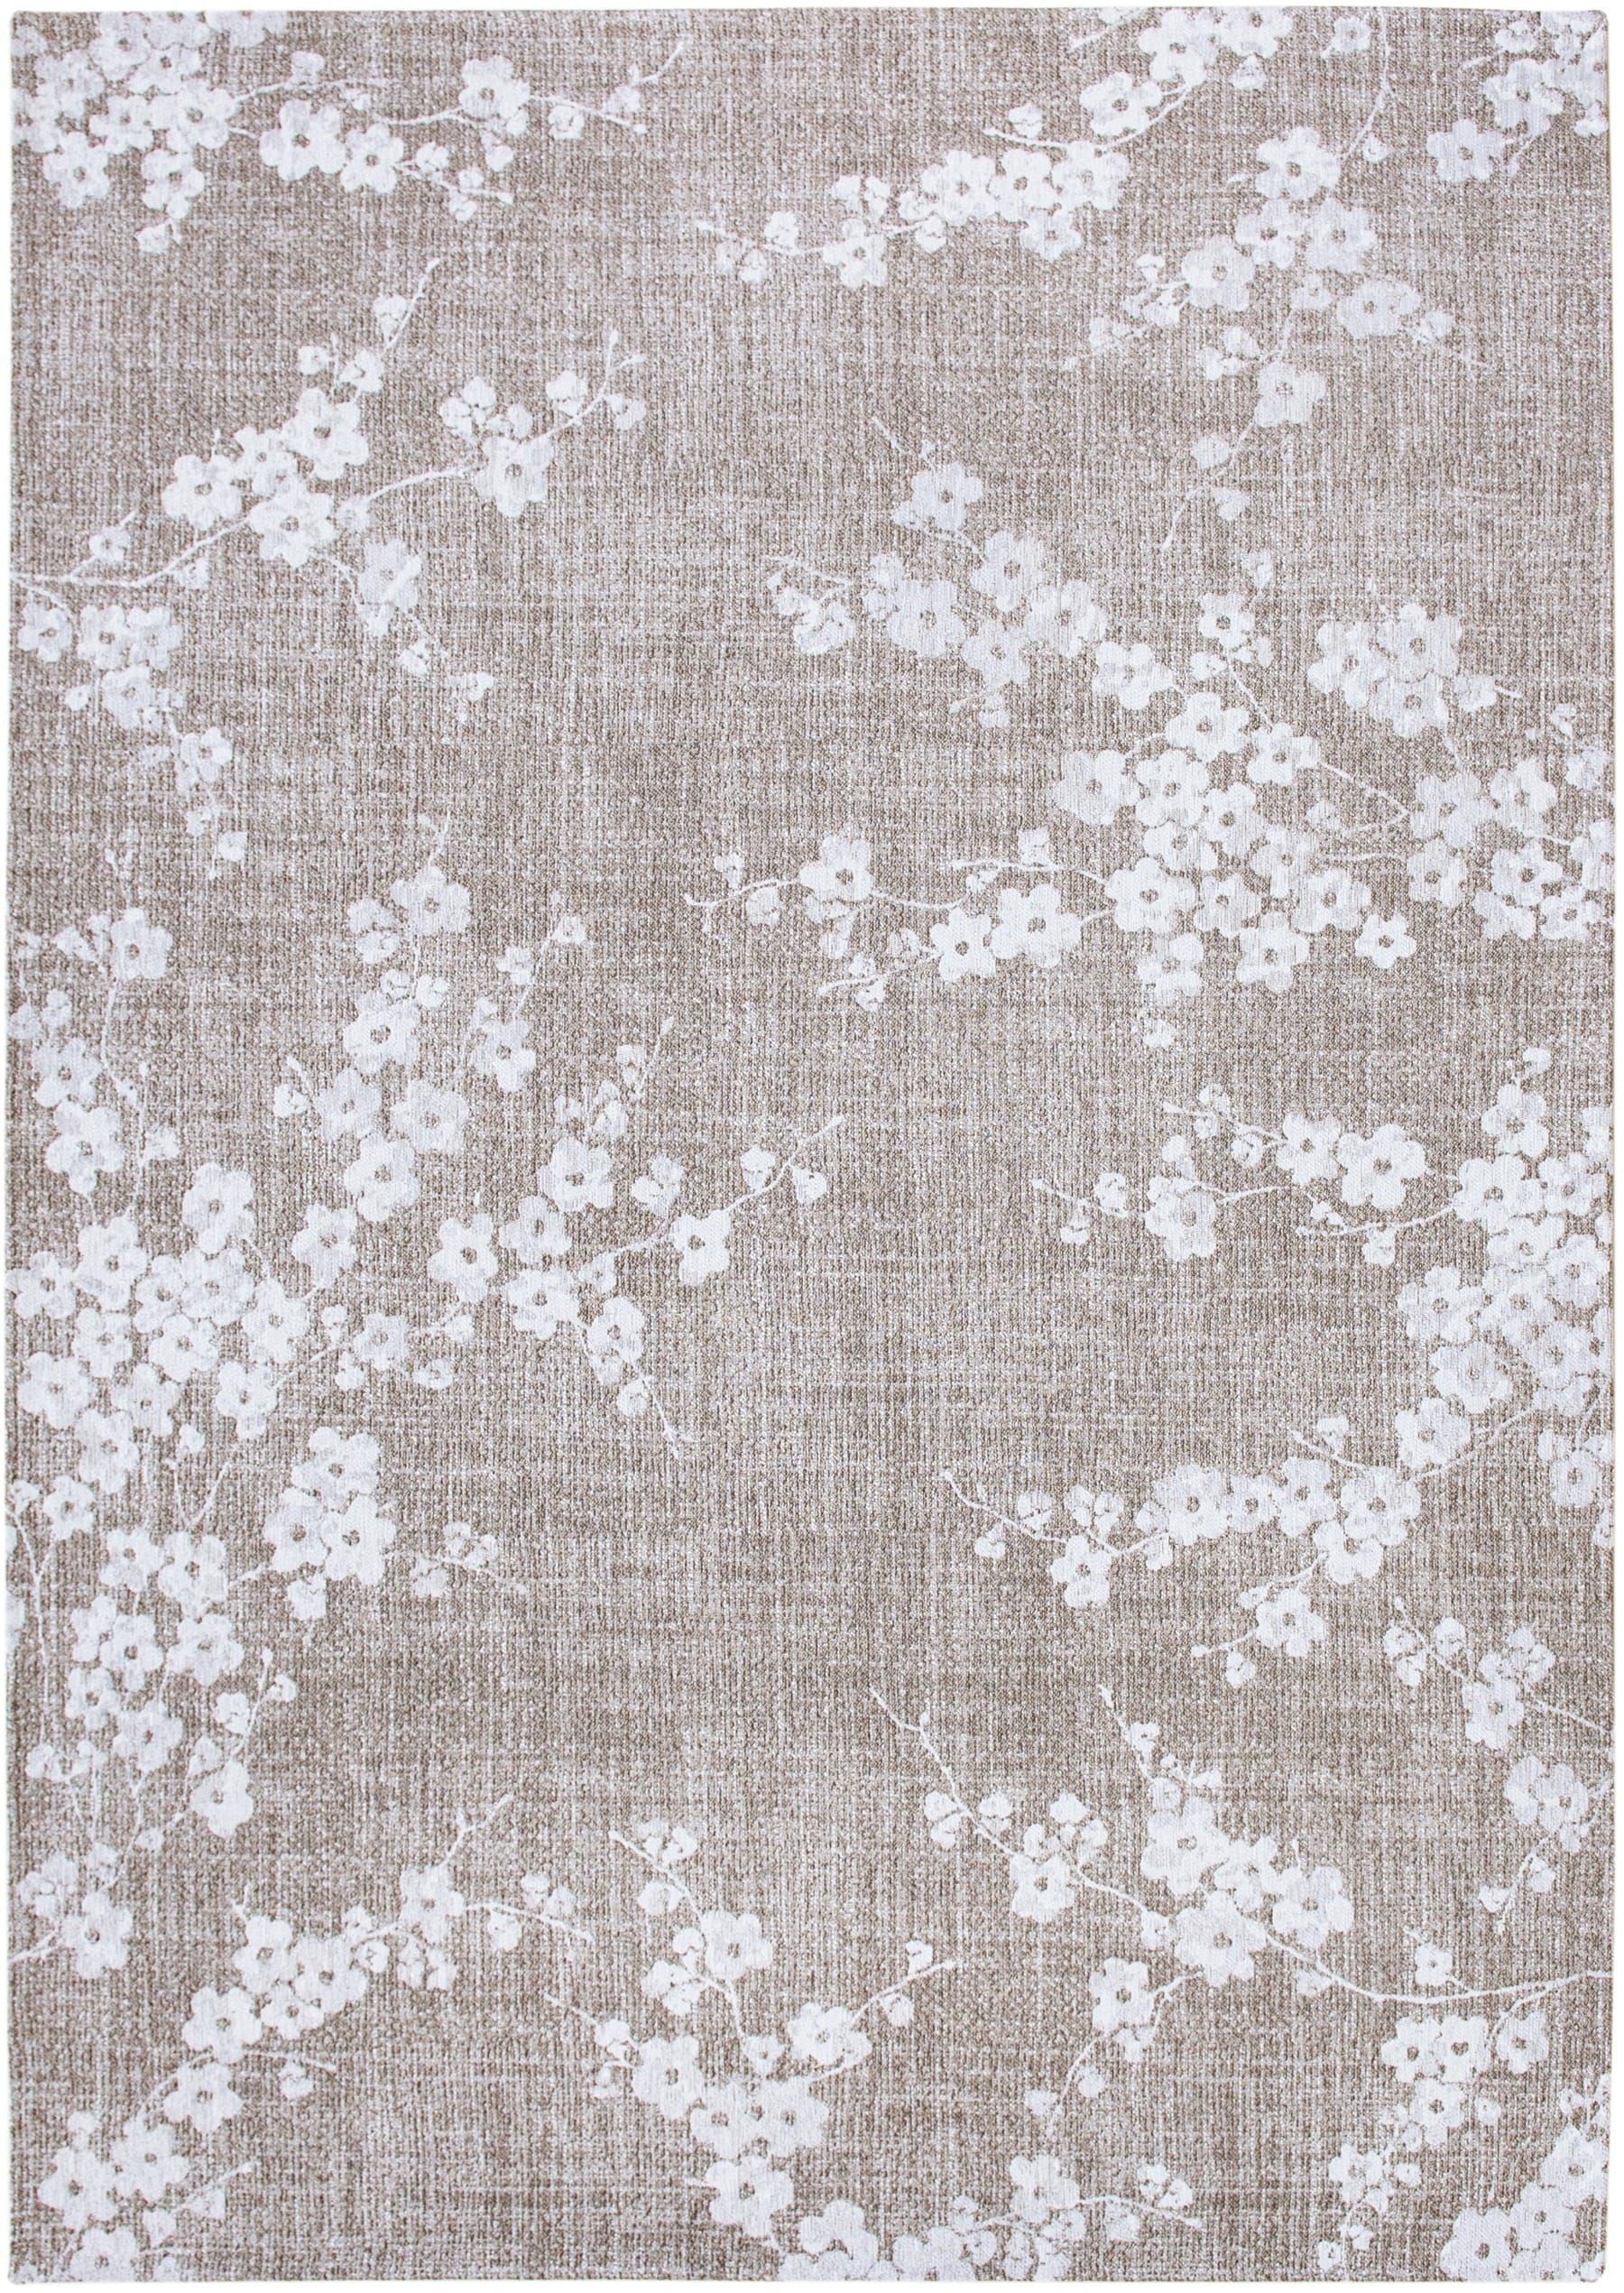 Sakura Collection Morning Mist 9373 rug by Louis De Poortere